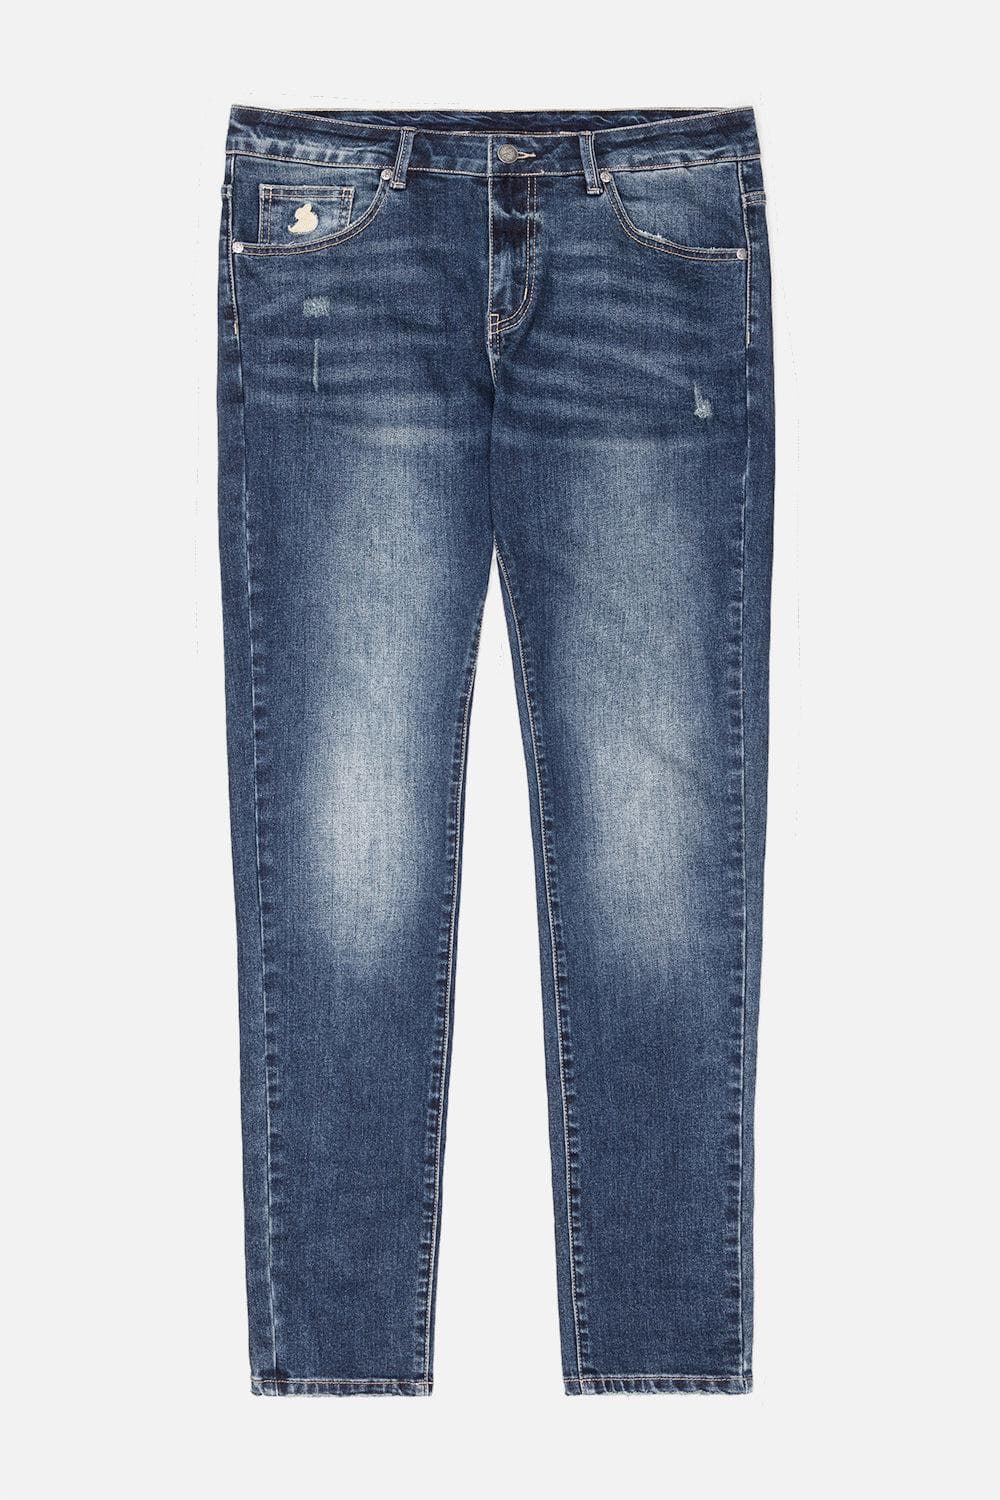 Men's Denim - Jackets, Shorts, Joggers, Jeans